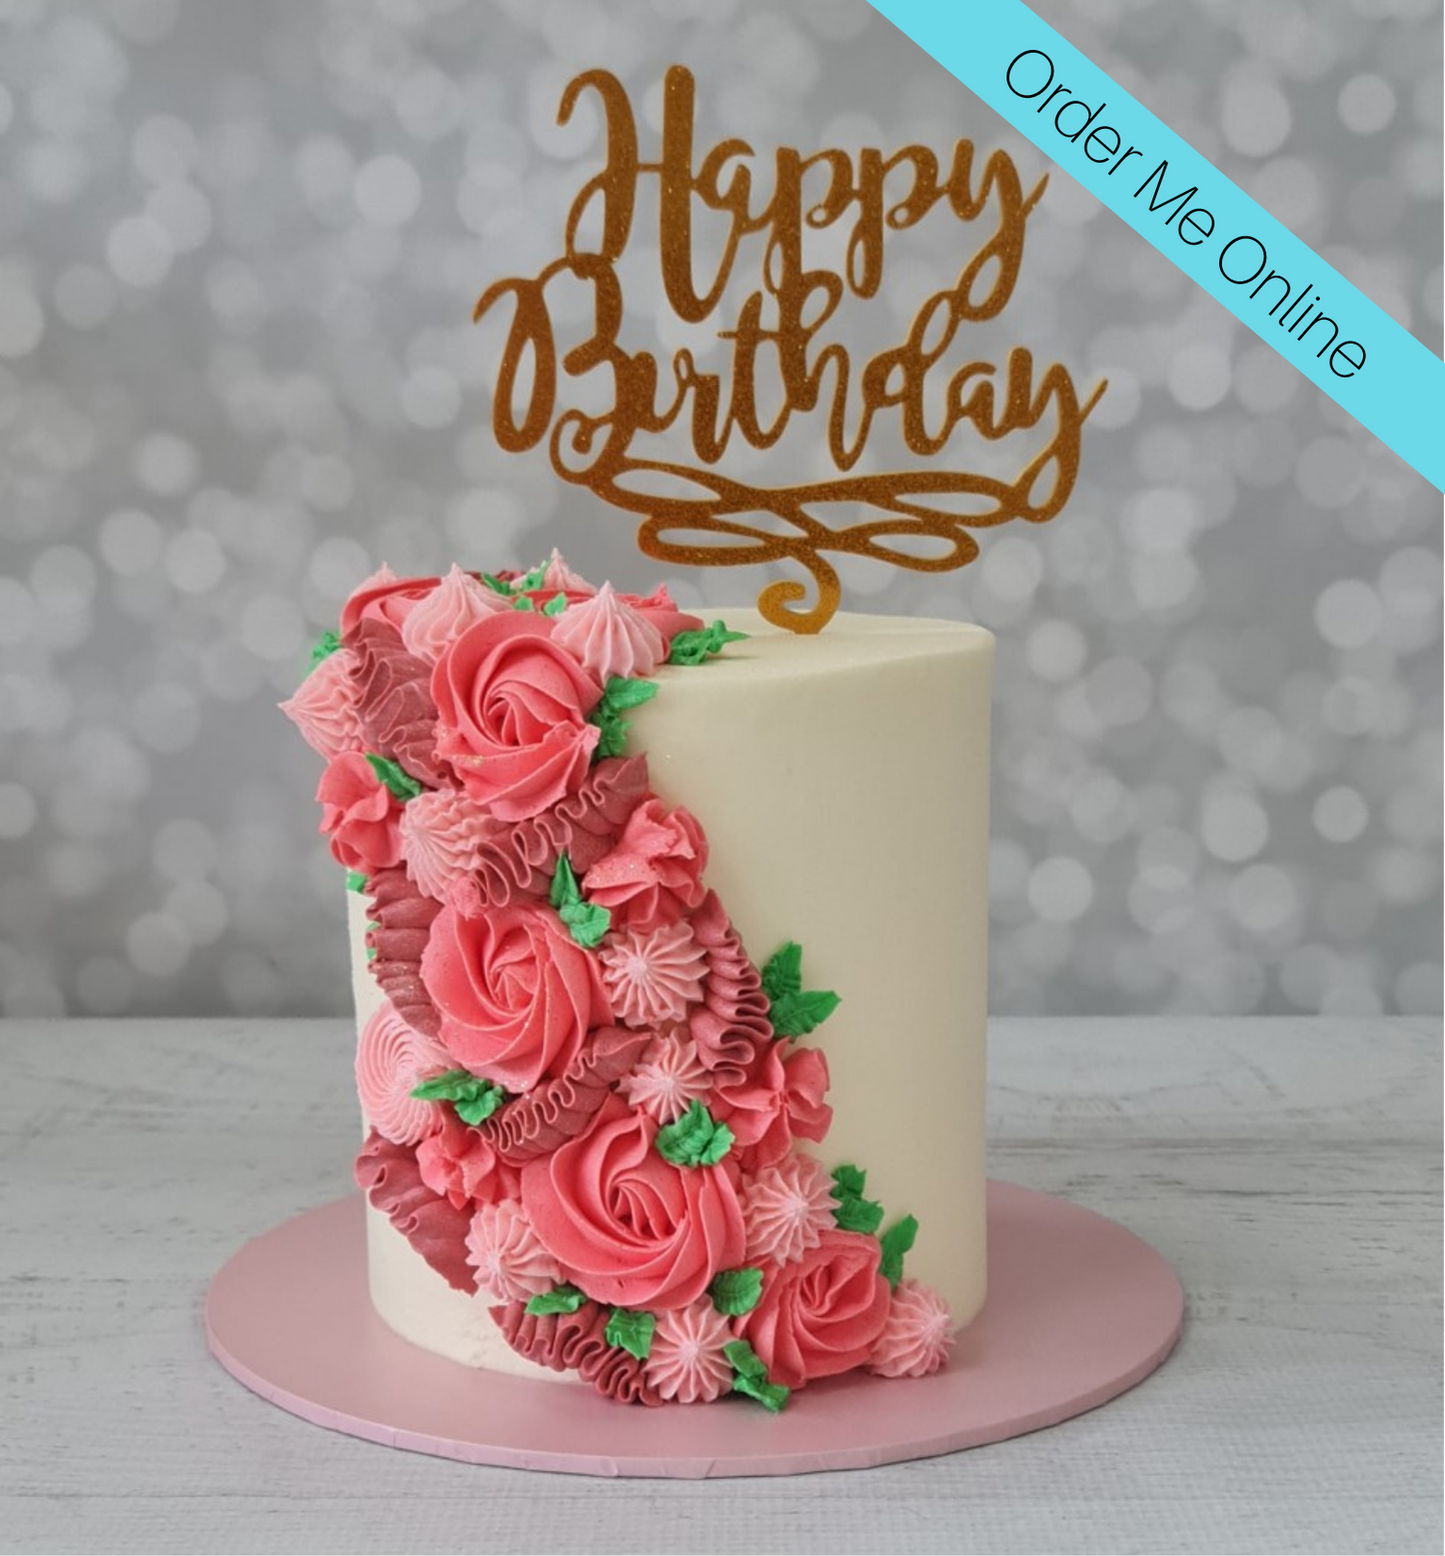 62 Ladies cakes ideas | cakes for women, cake, cupcake cakes